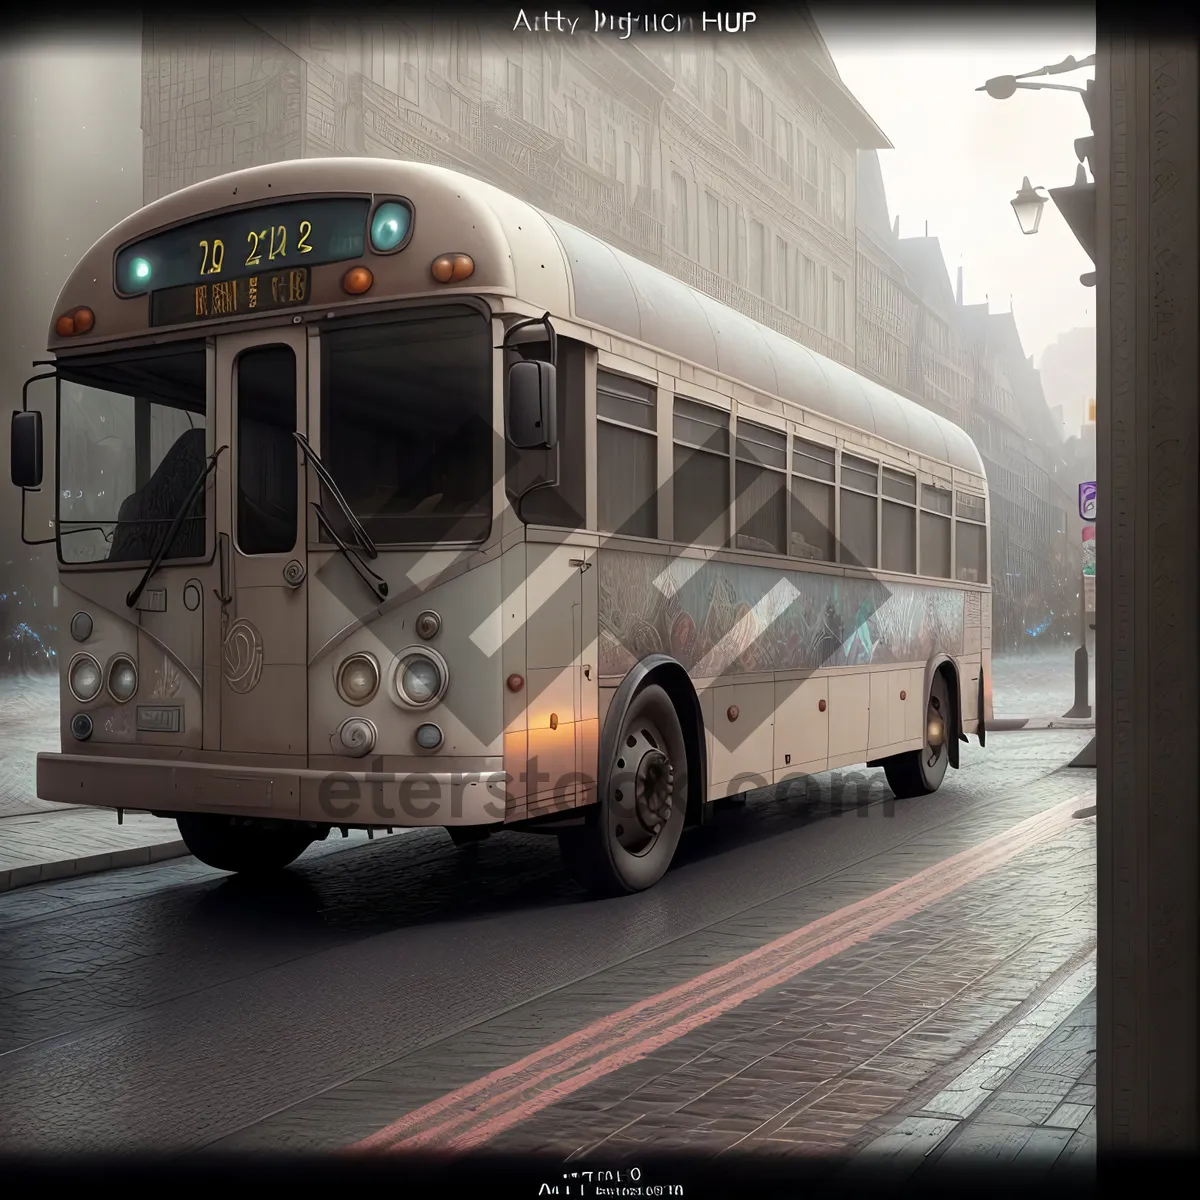 Picture of Public Shuttle Bus: Efficient Transportation for Travel